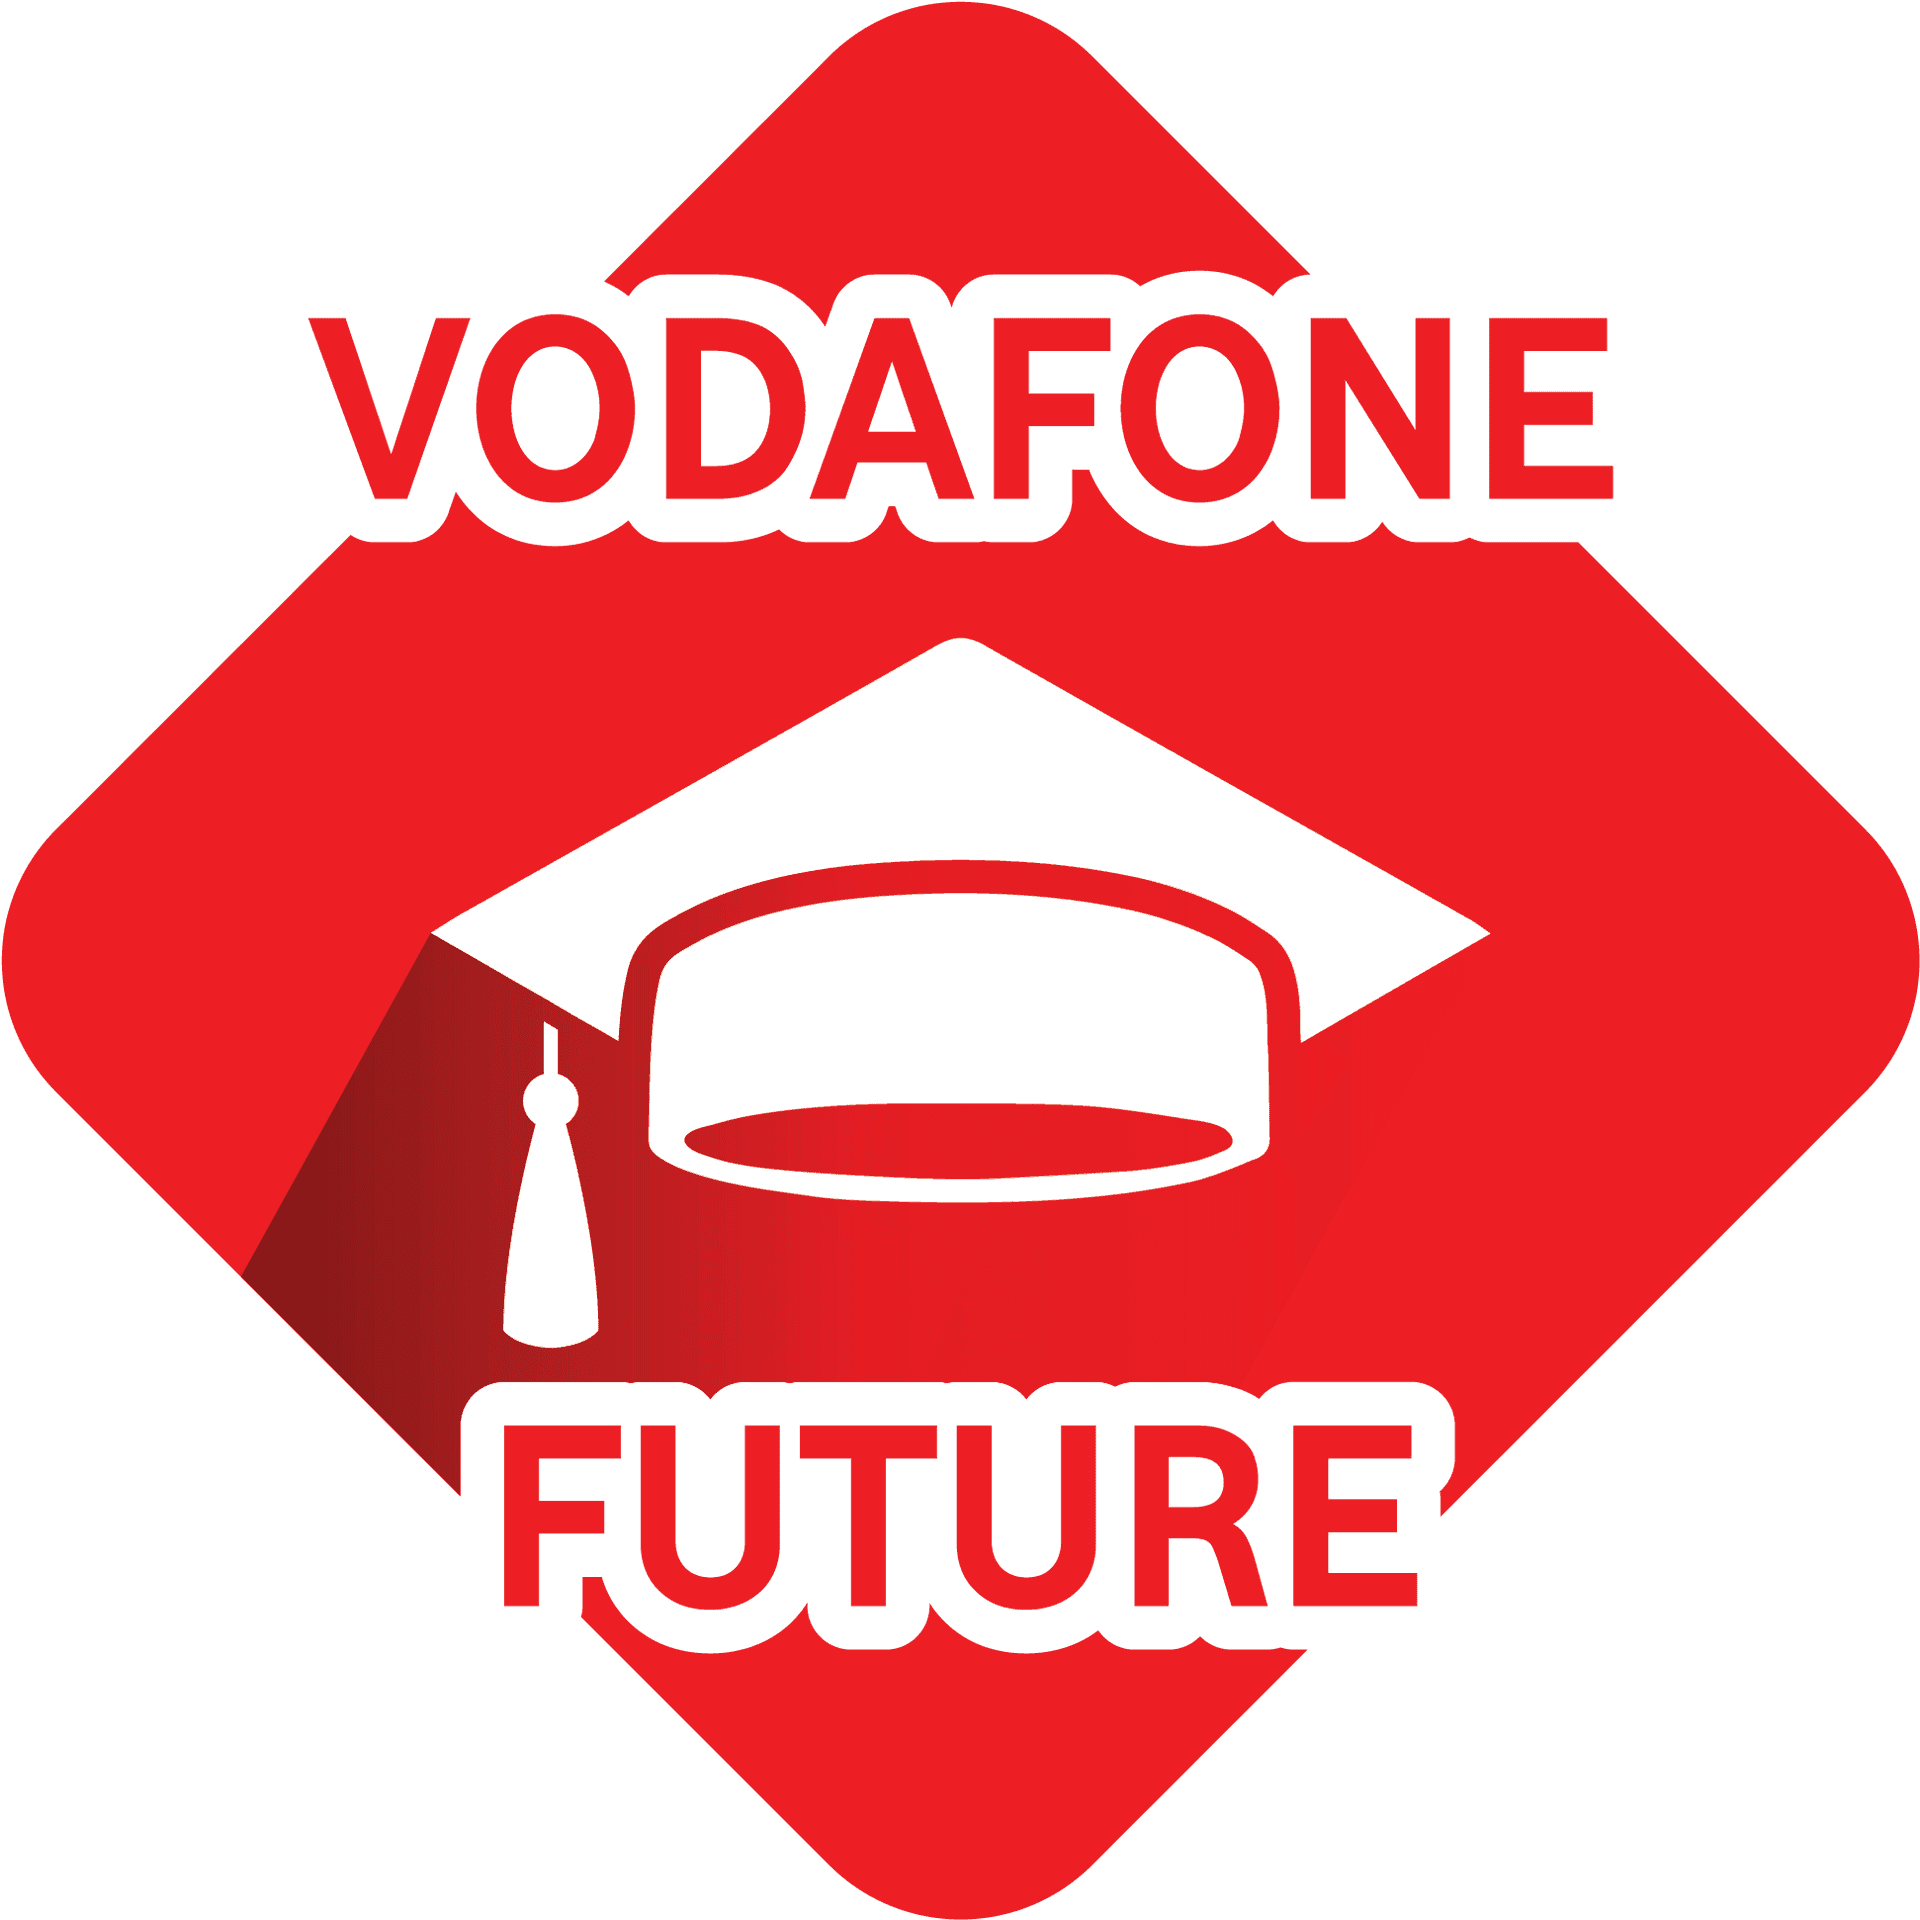 Vodafone Future Graduation Cap Logo PNG image